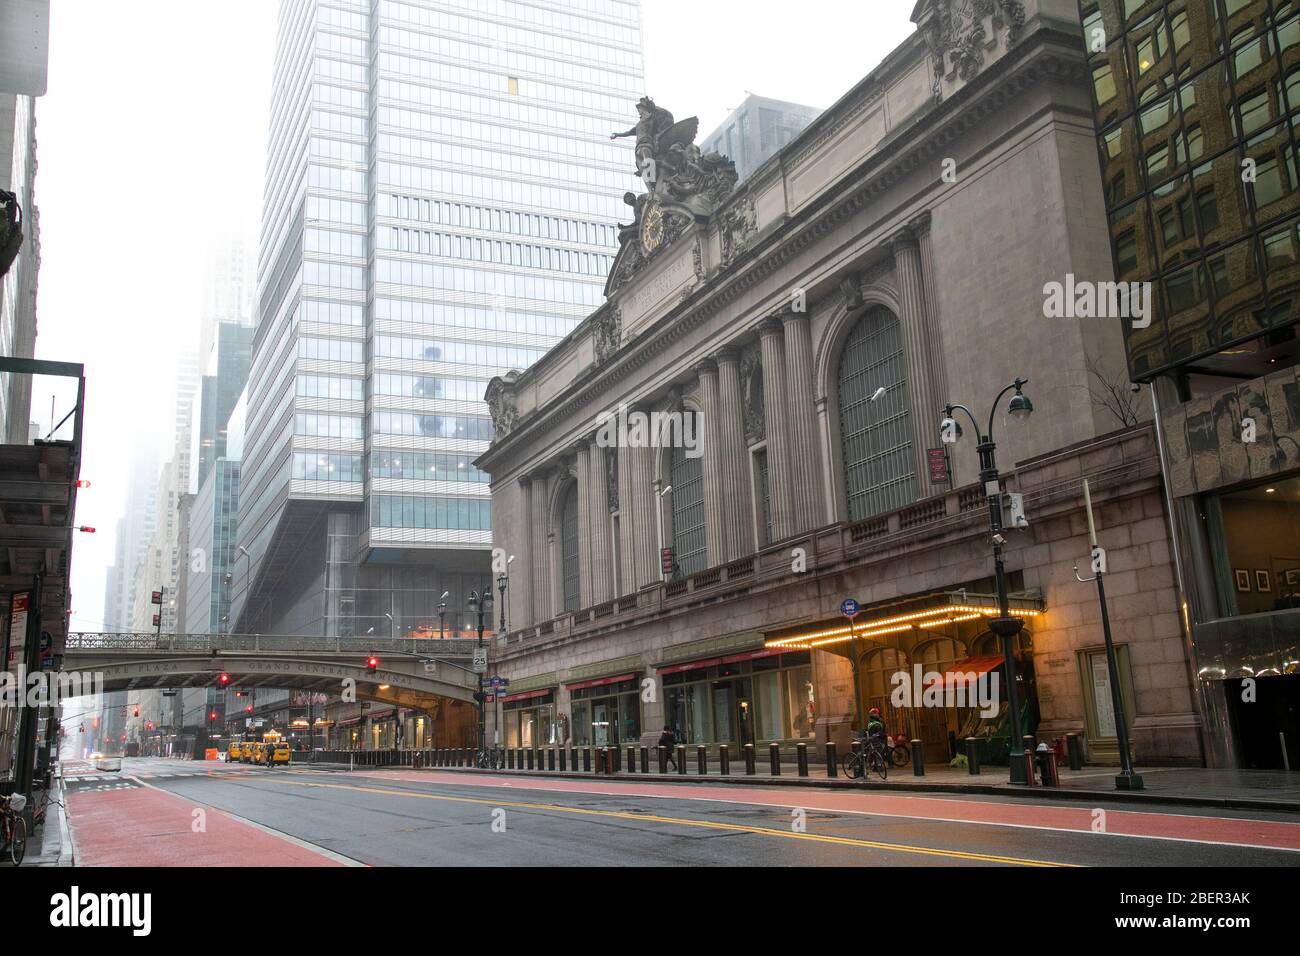 42nd Street am Grand Central Station ruhig während COVID-19, New York City. Stockfoto